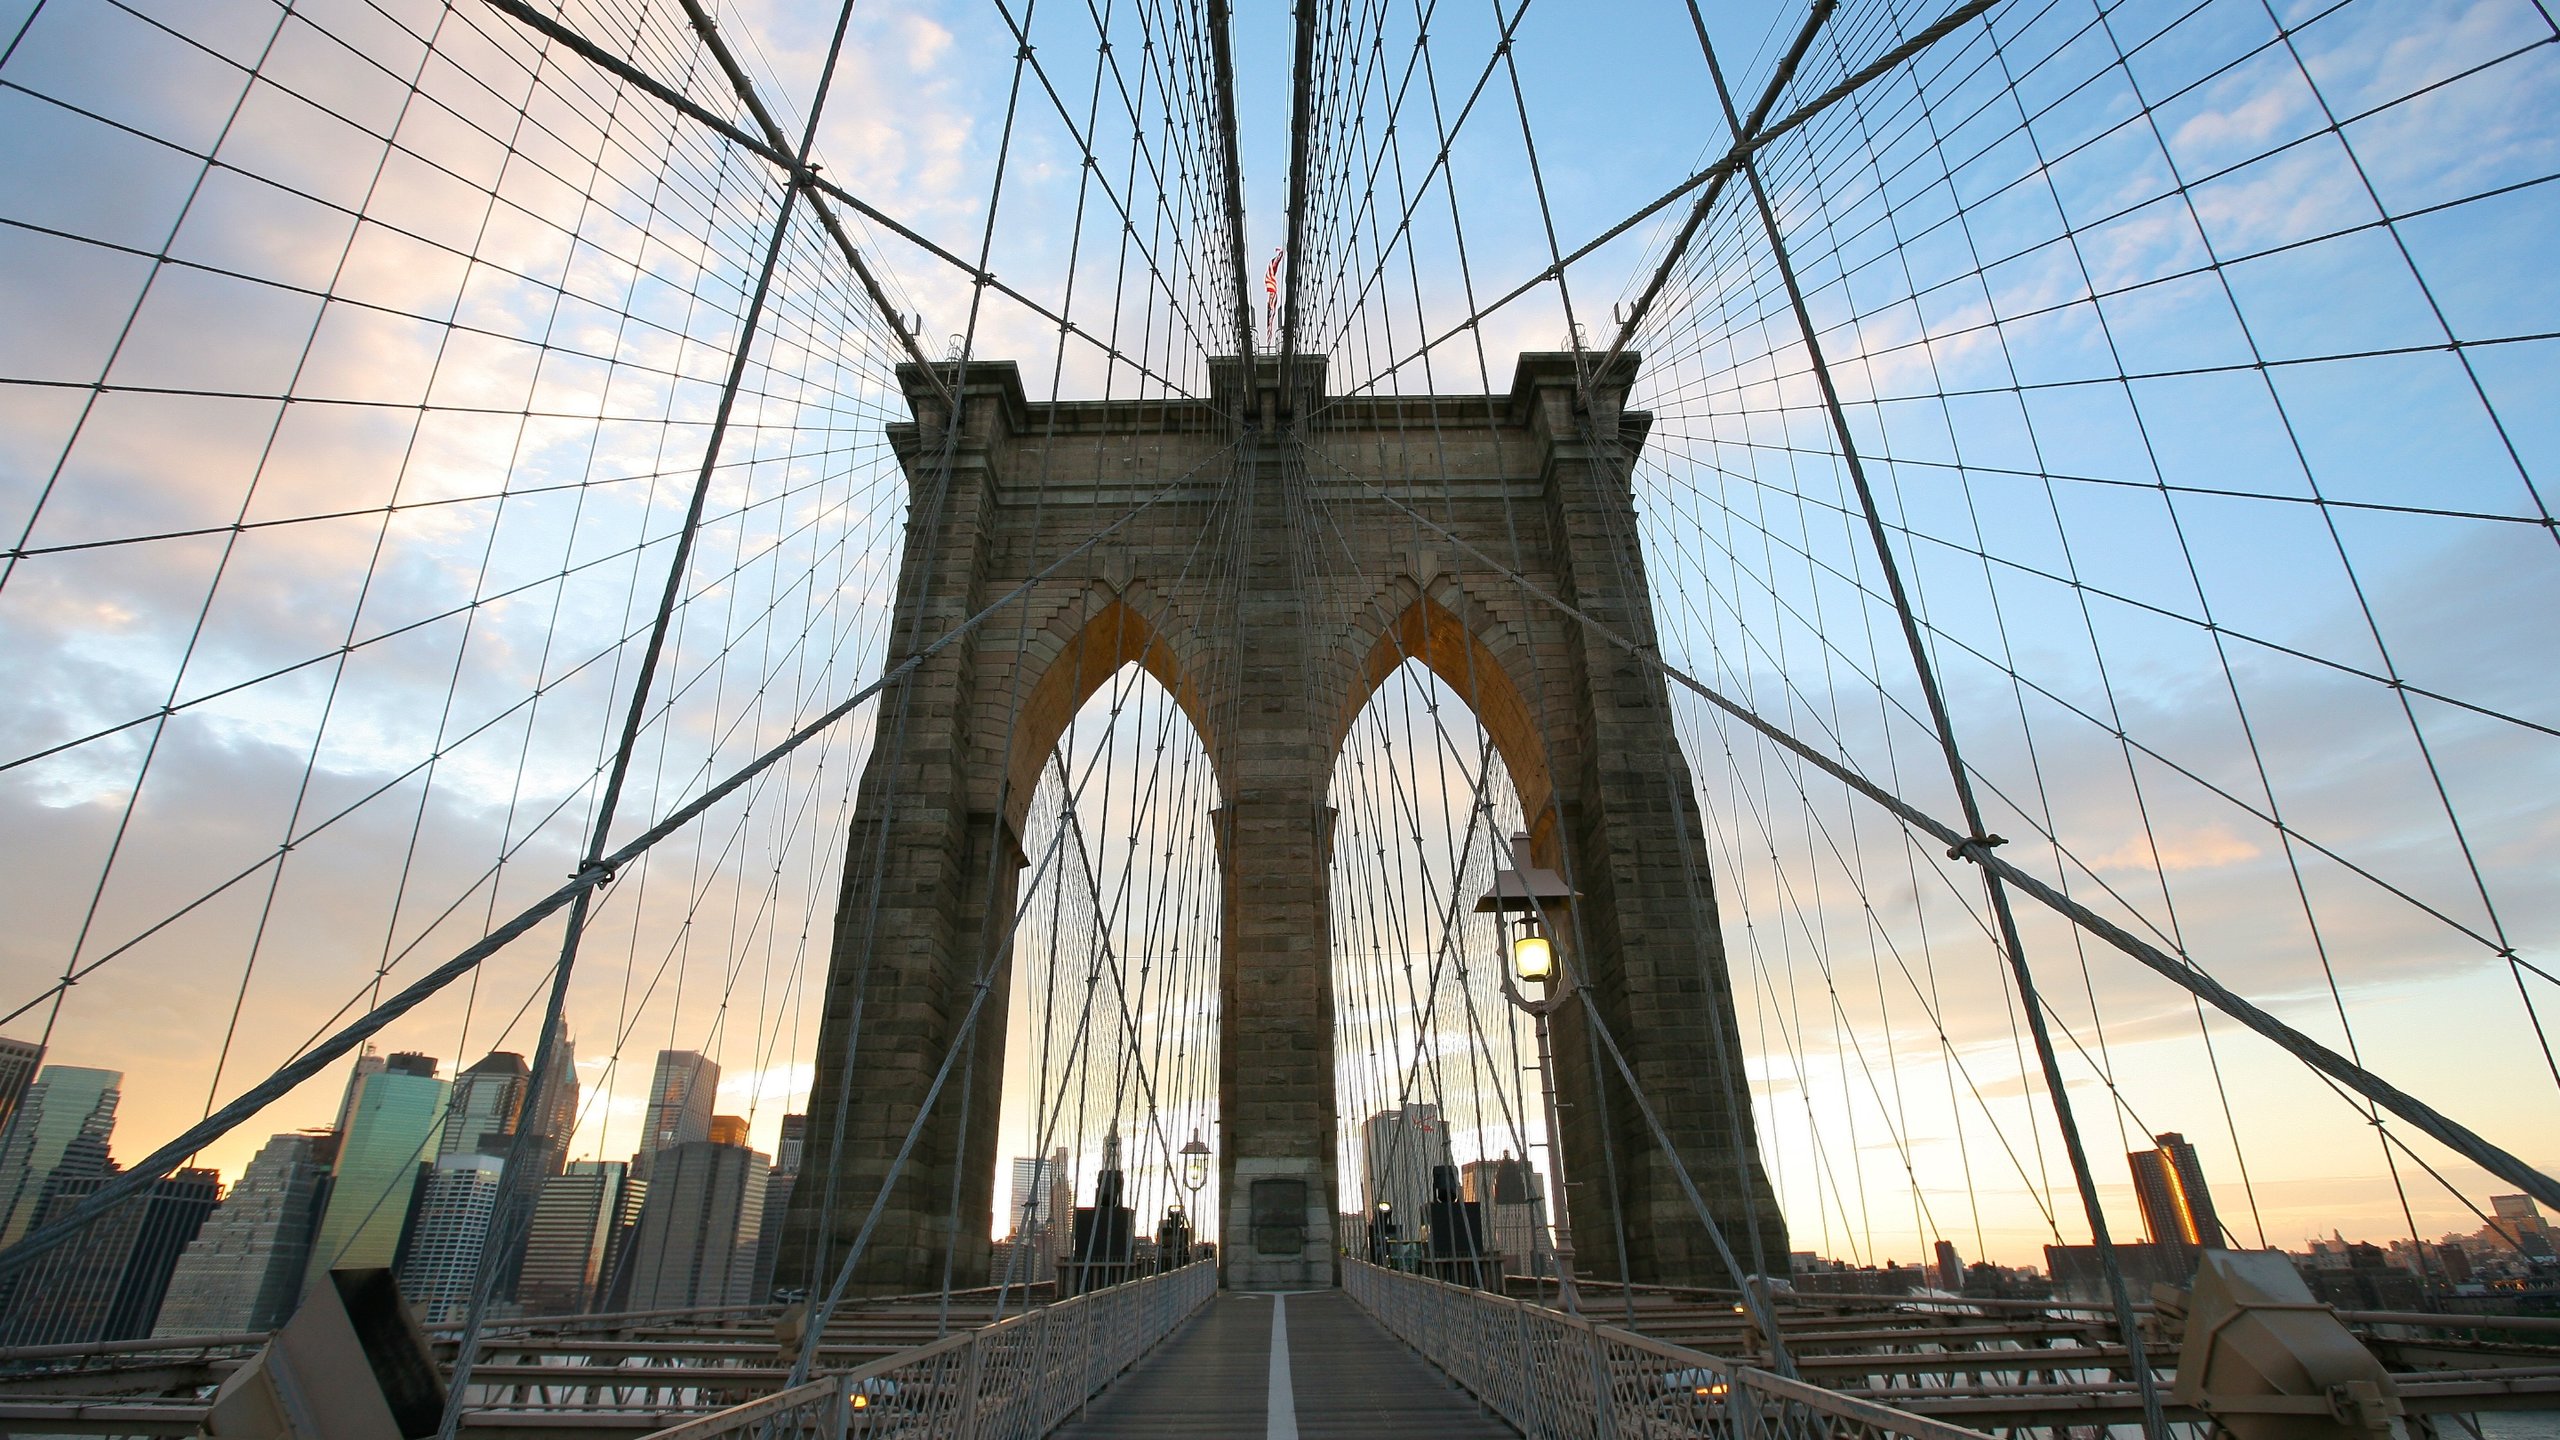 Brooklyn Bridge, New York, US